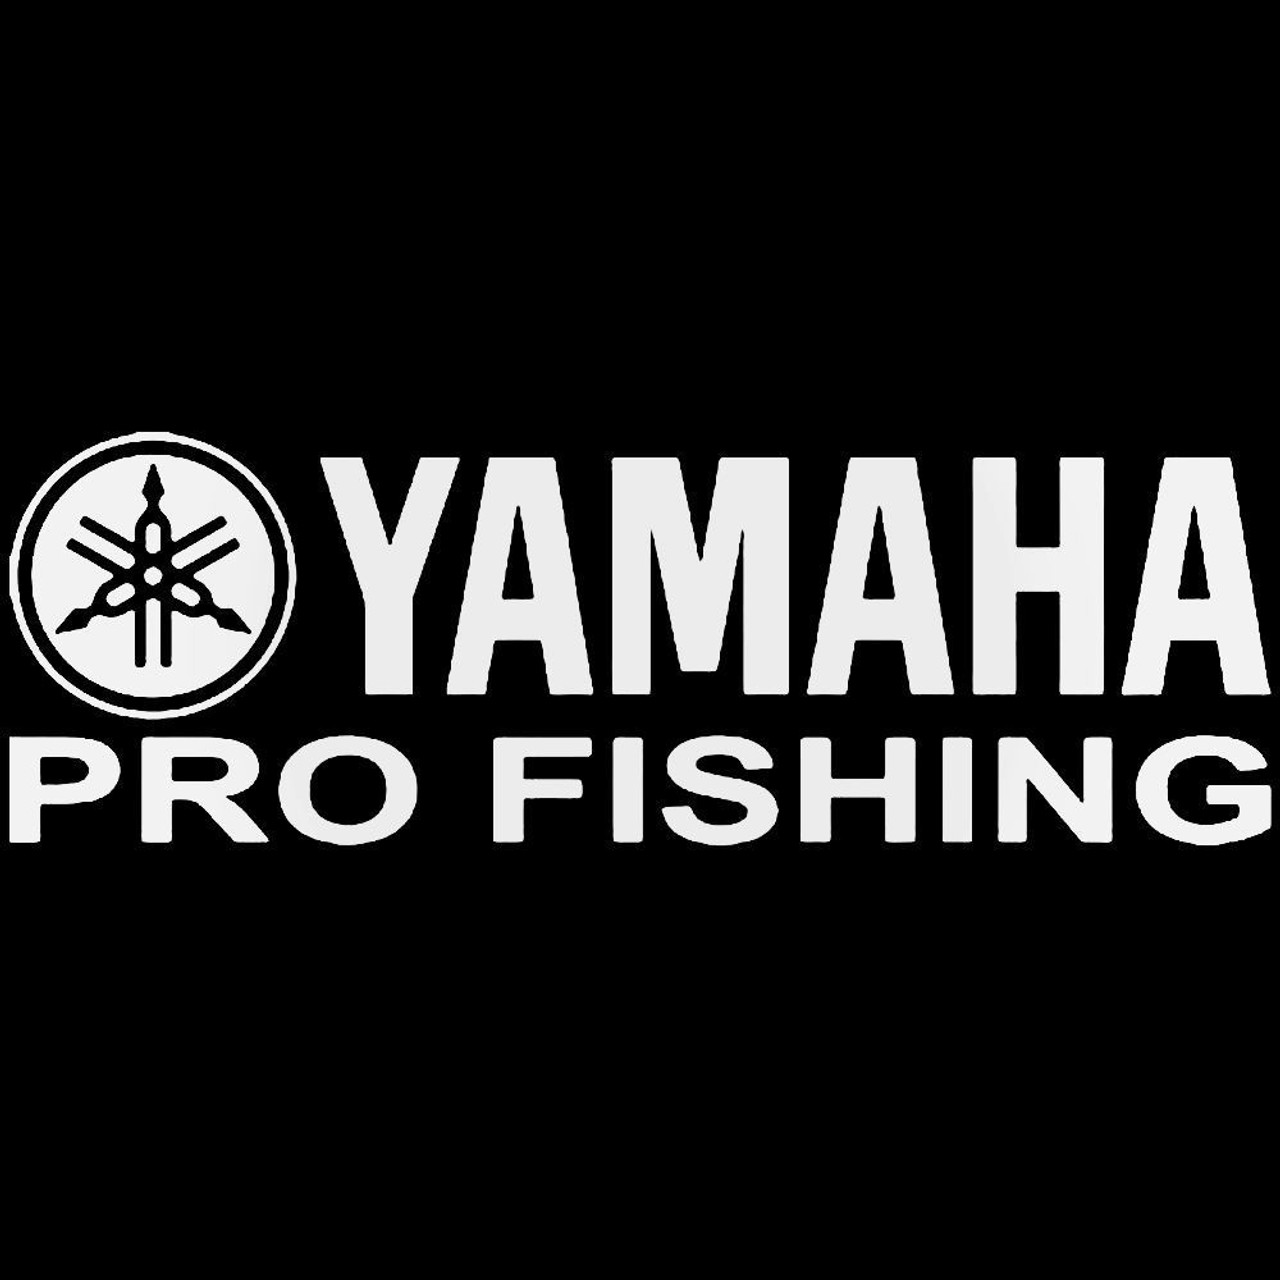 Yamaha Pro Fishing Vinyl Decal Sticker